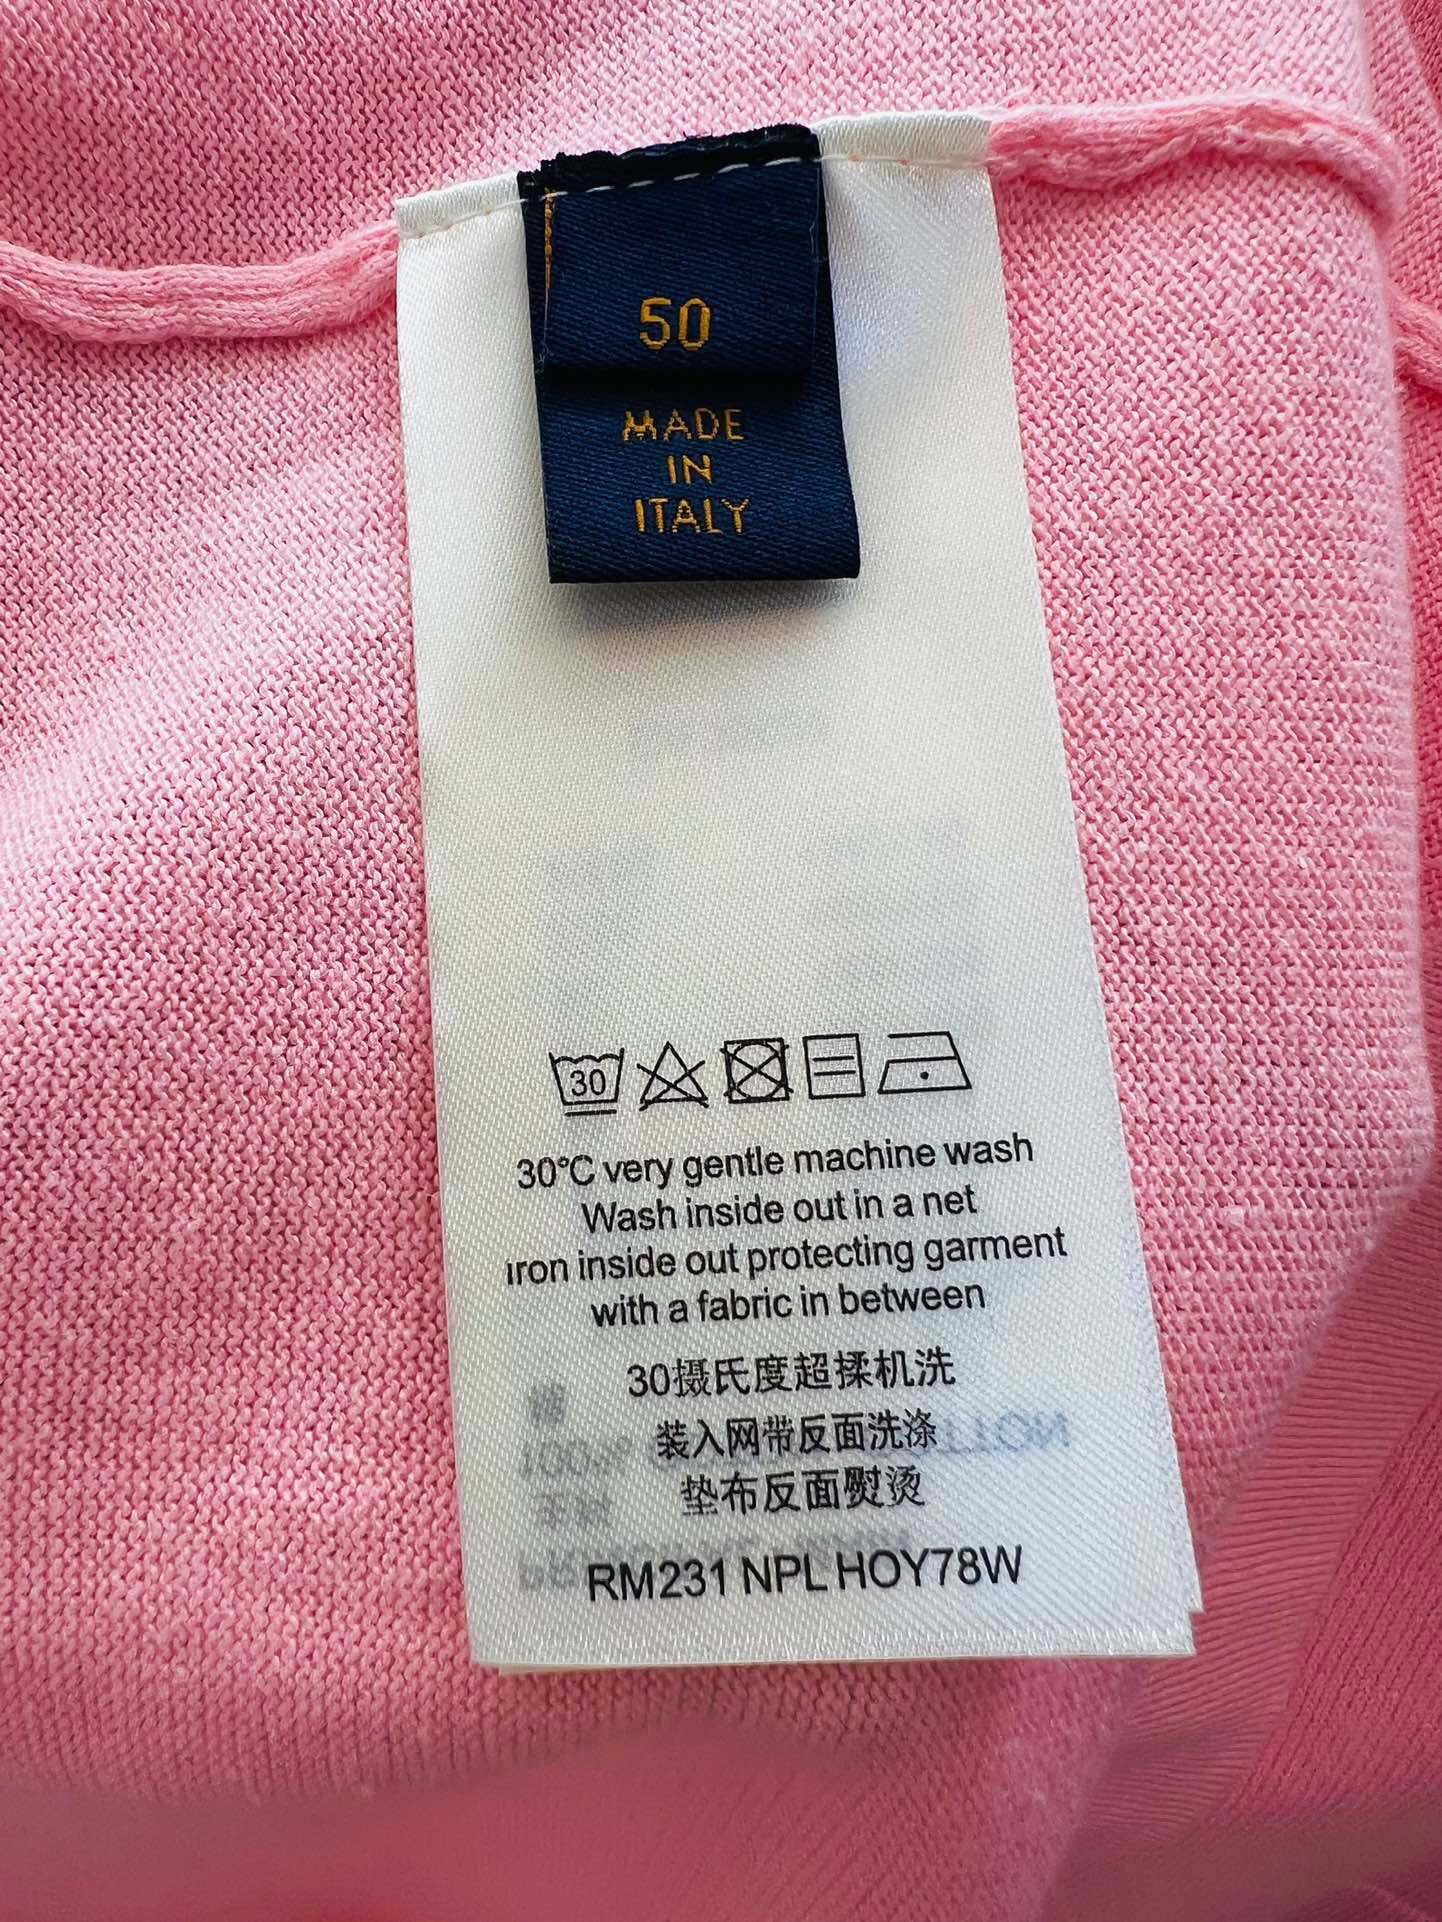 Pink T-Shirt - Size 48